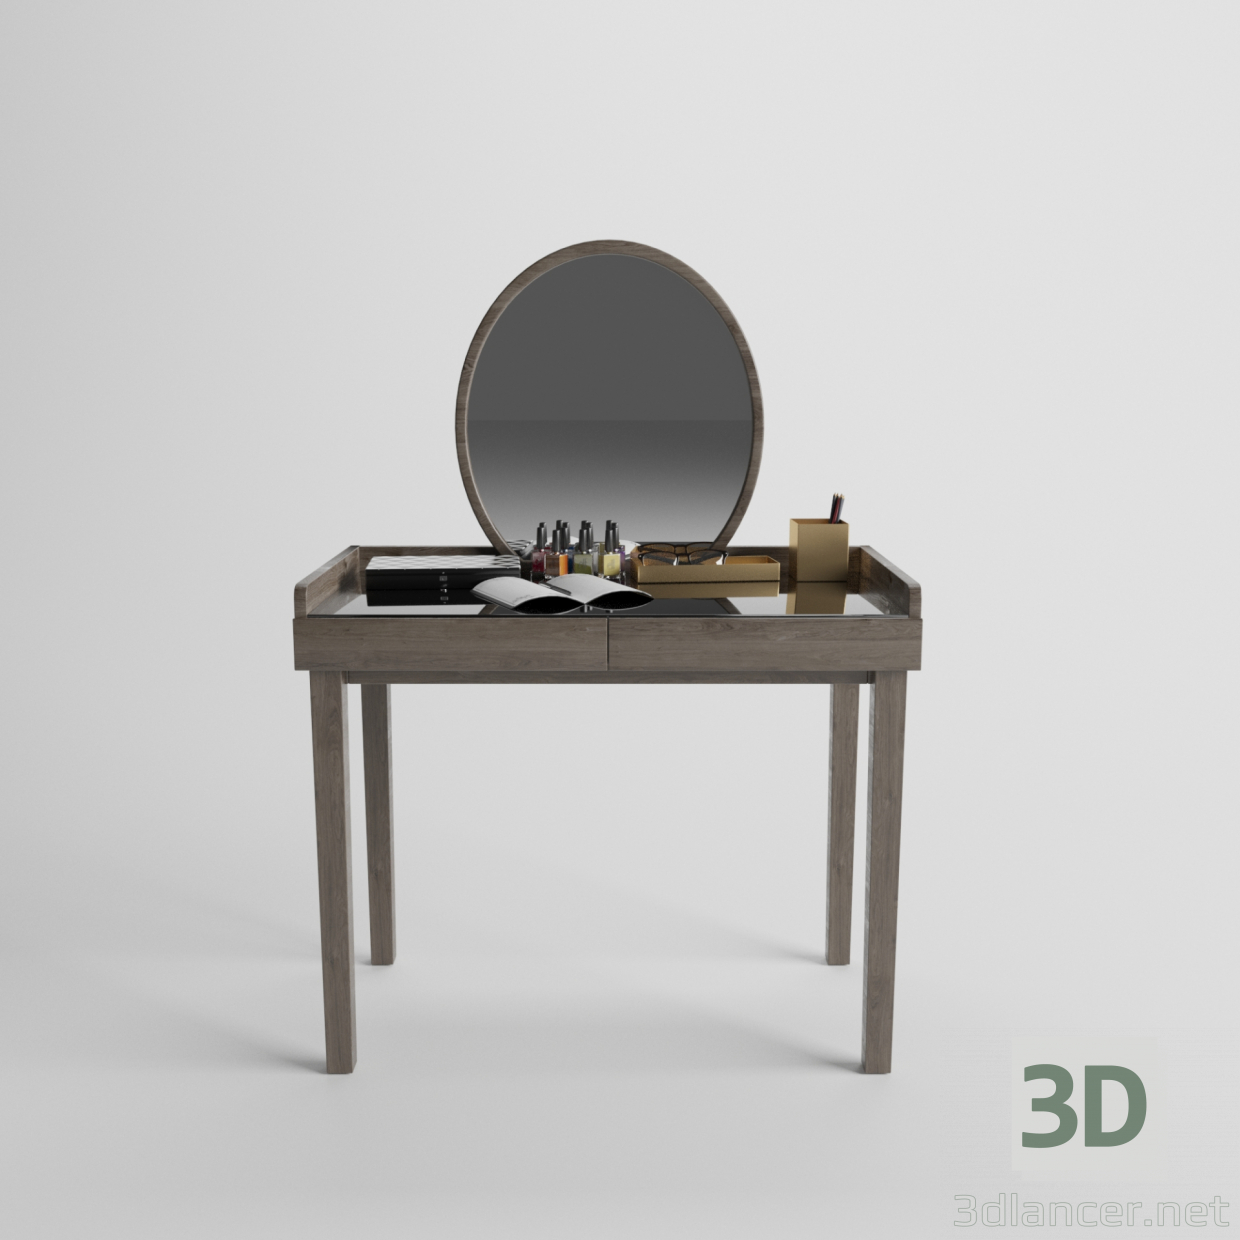 XanderSet 3D-Modell kaufen - Rendern